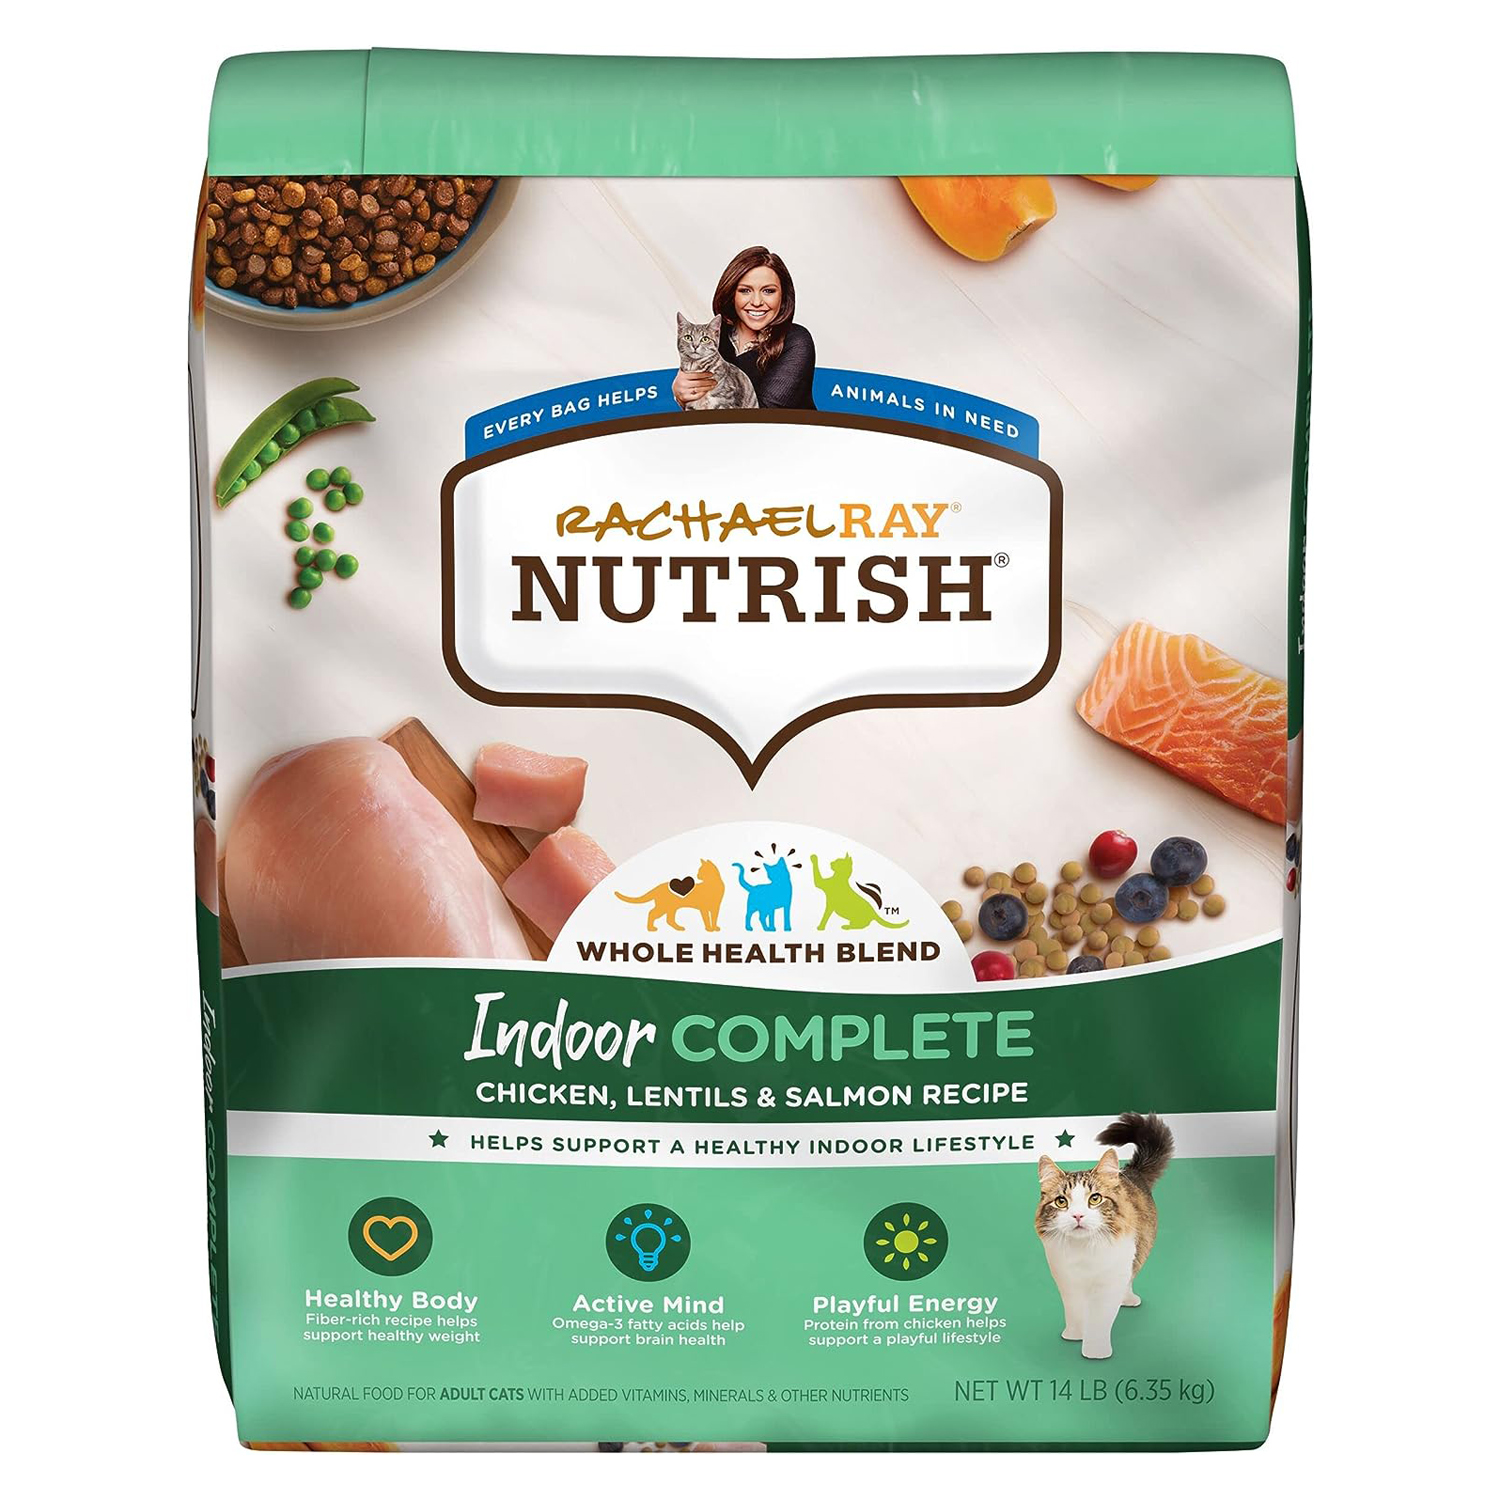 Rachael Ray Nutrish Indoor Complete Premium Natural Dry Cat Food